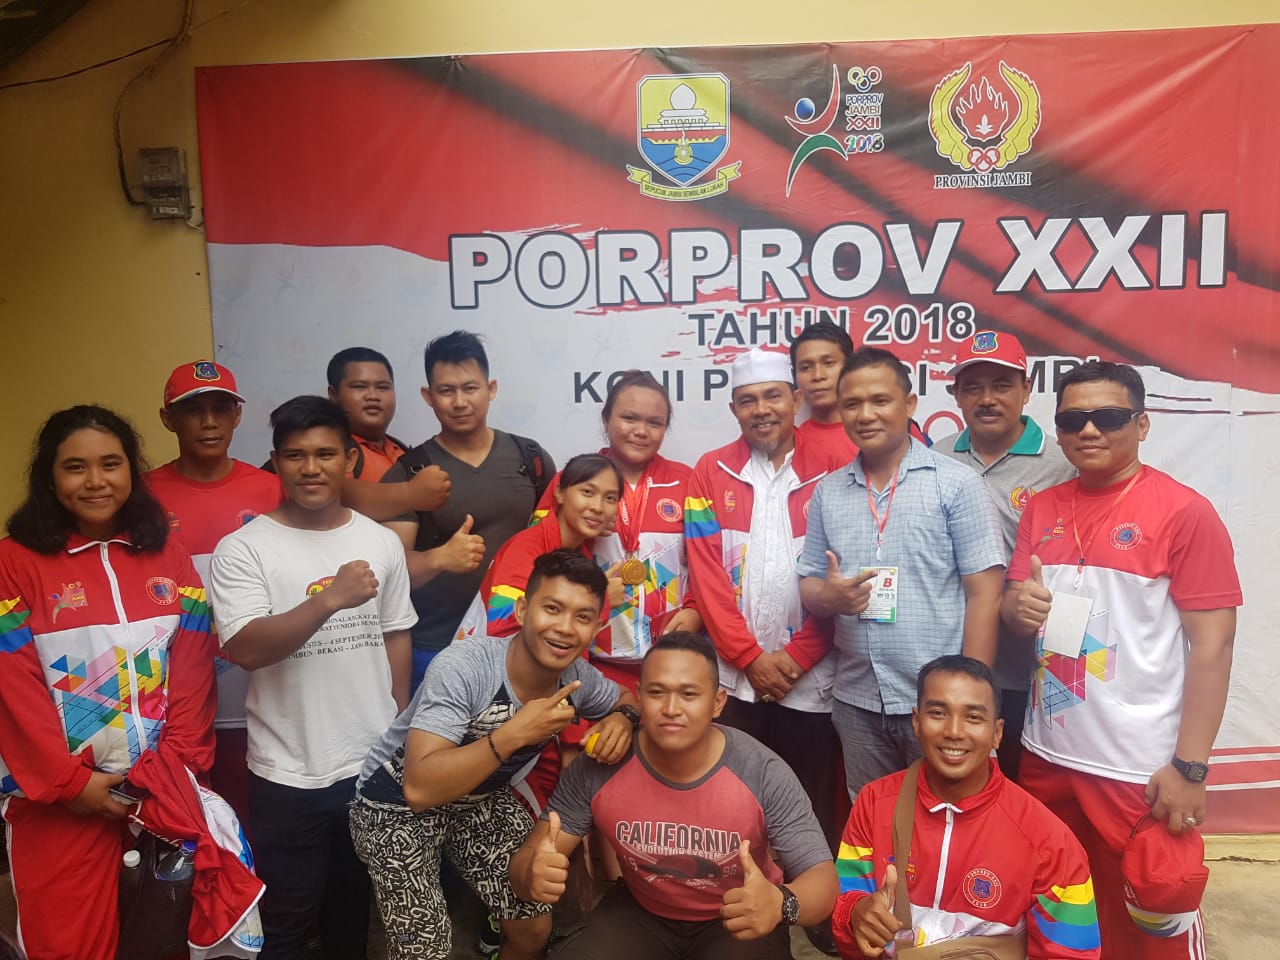 Atlet Angkat Besi Jihan Syafitri Sumbang 3 Mendali Emas di Porprov Jambi 2018